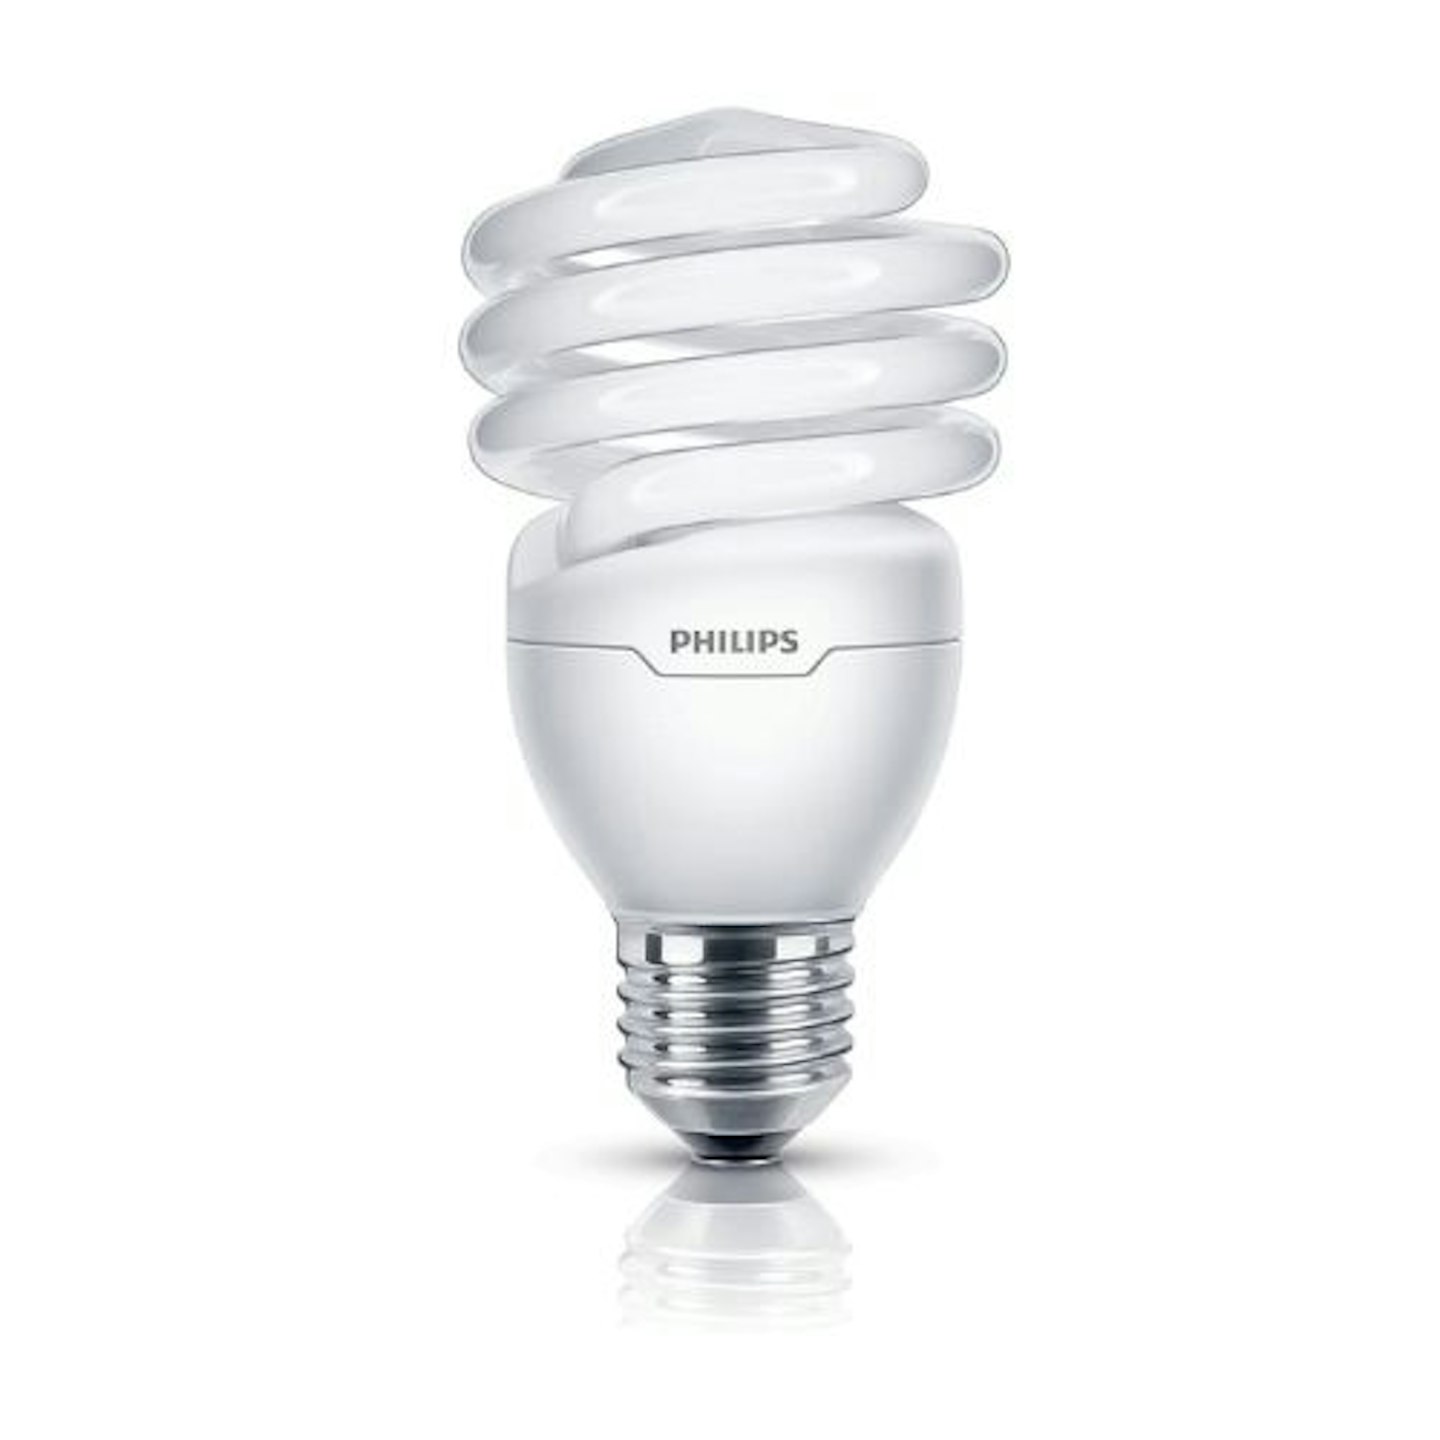 Philips Tornado Flourescent Spiral Energy Saving Light Bulb